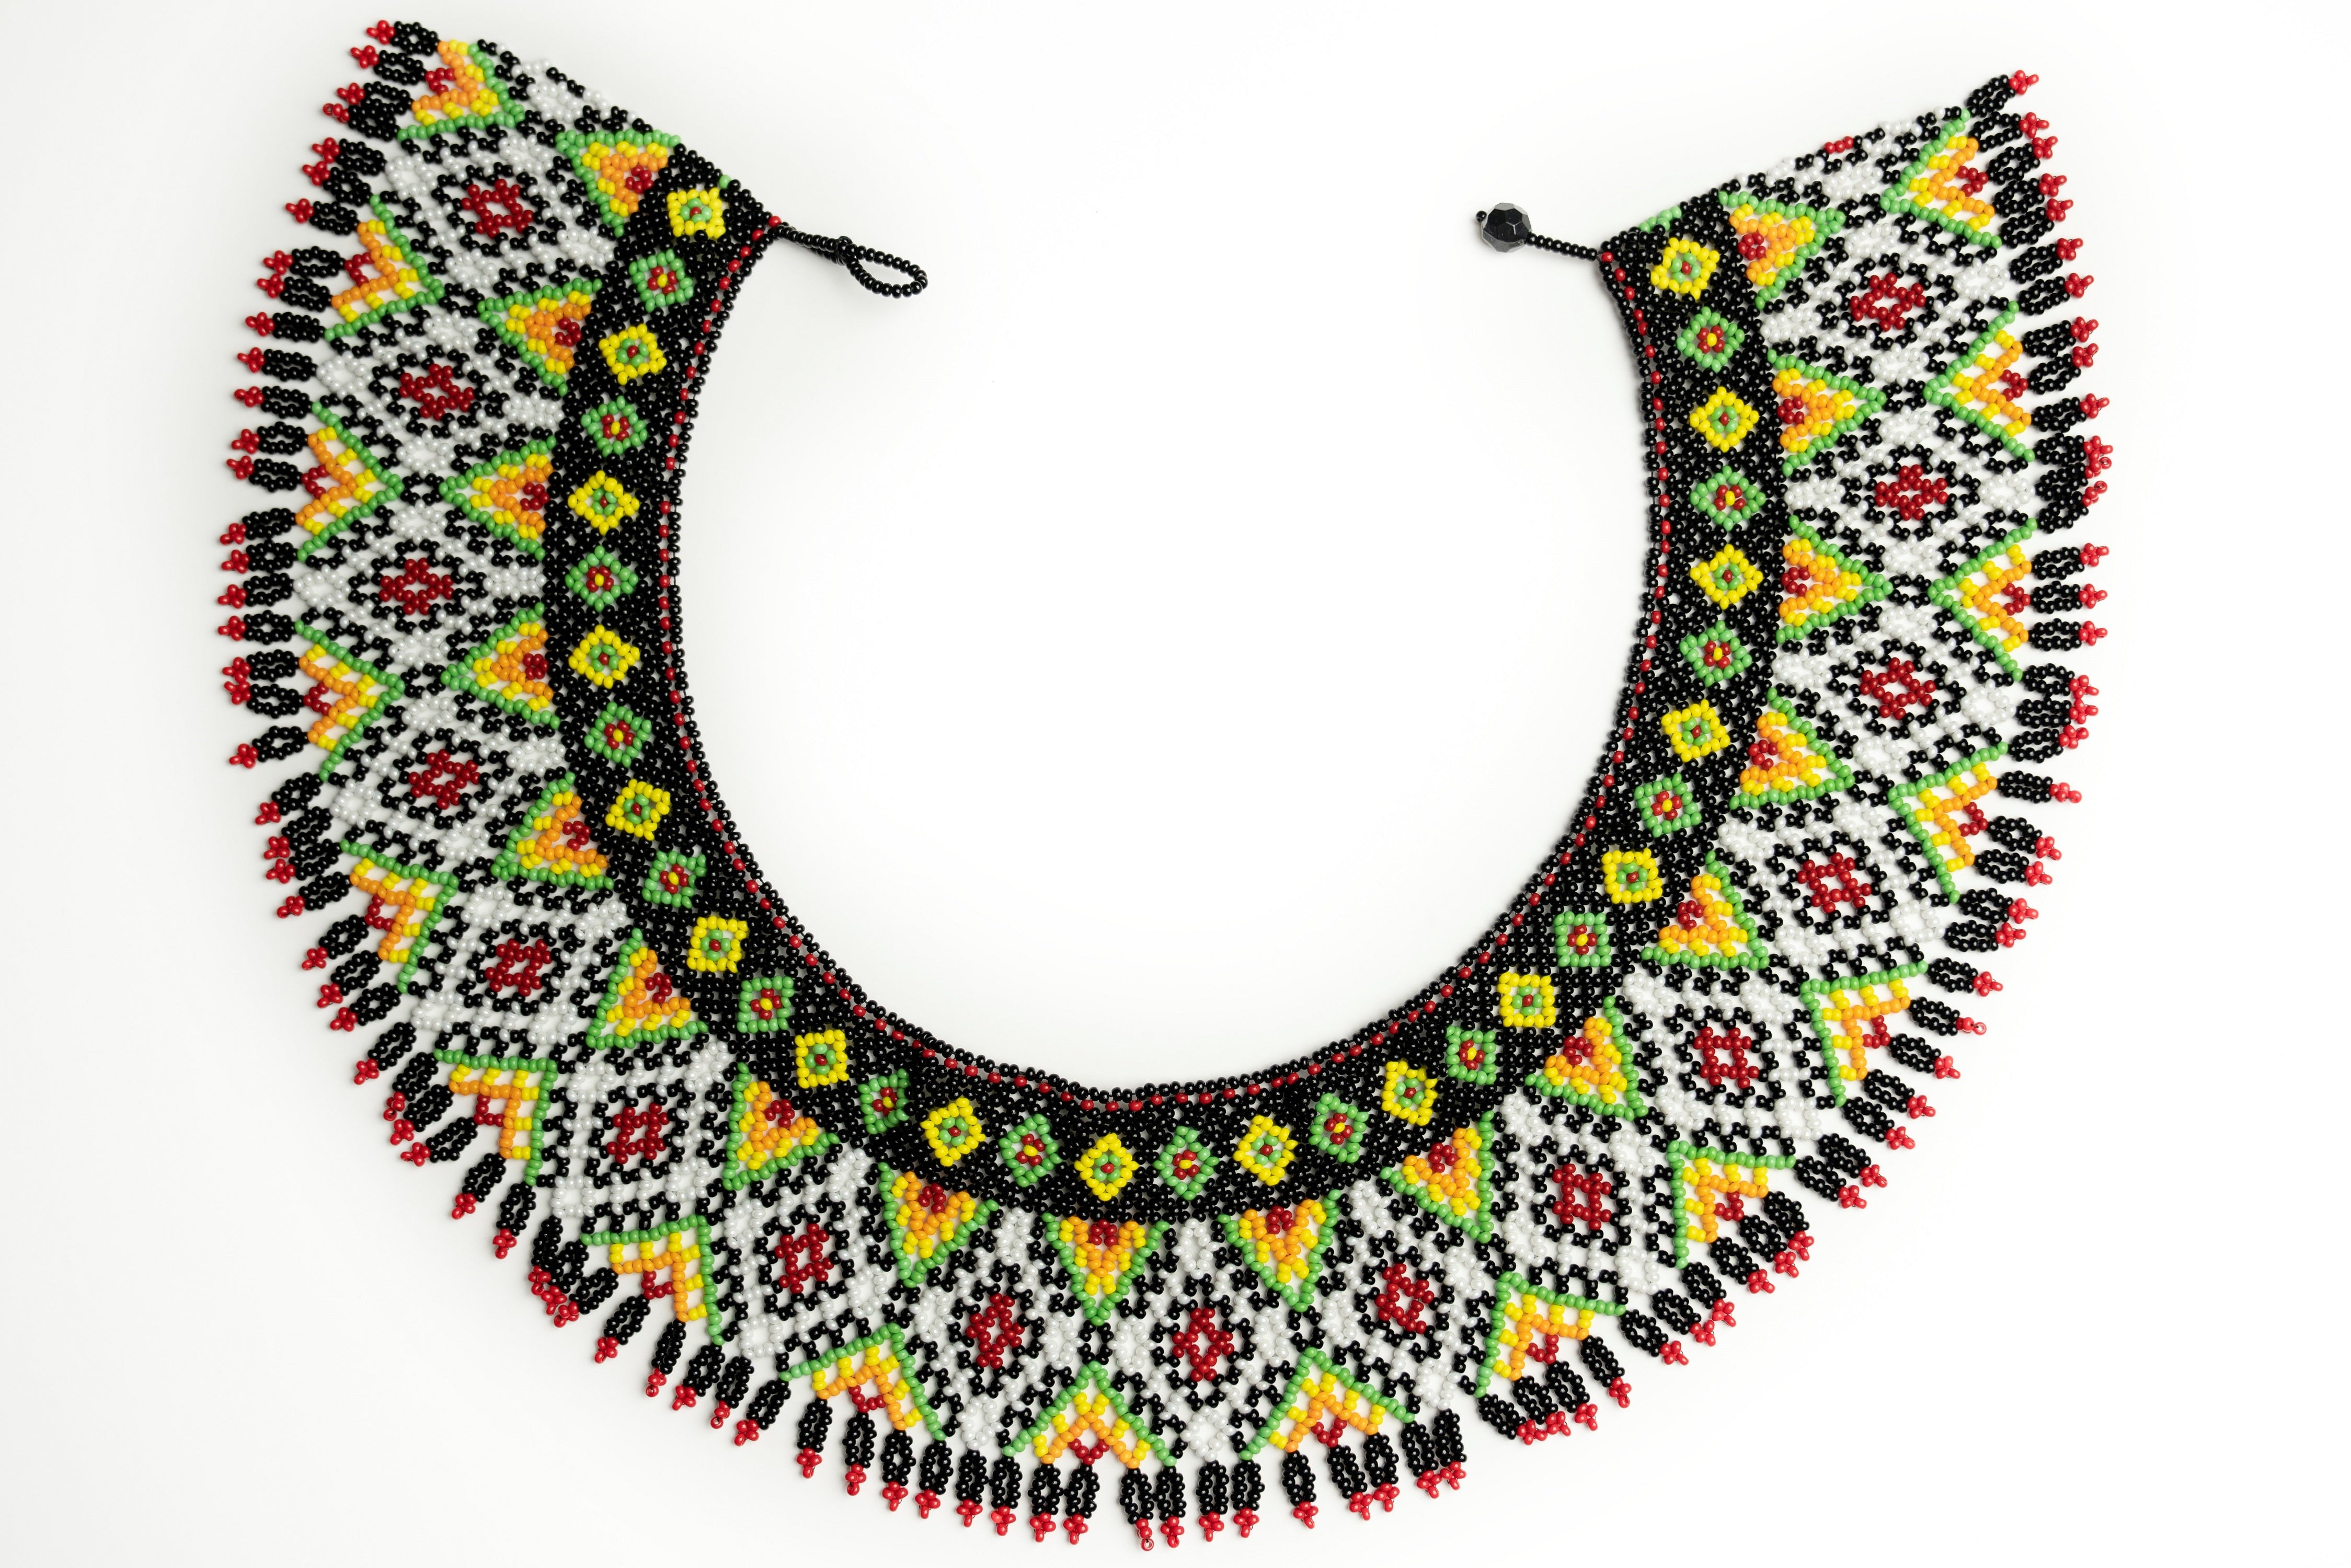 Red Ukrainian Accessories Necklace, Beads, Handmade Ceramic Beaded